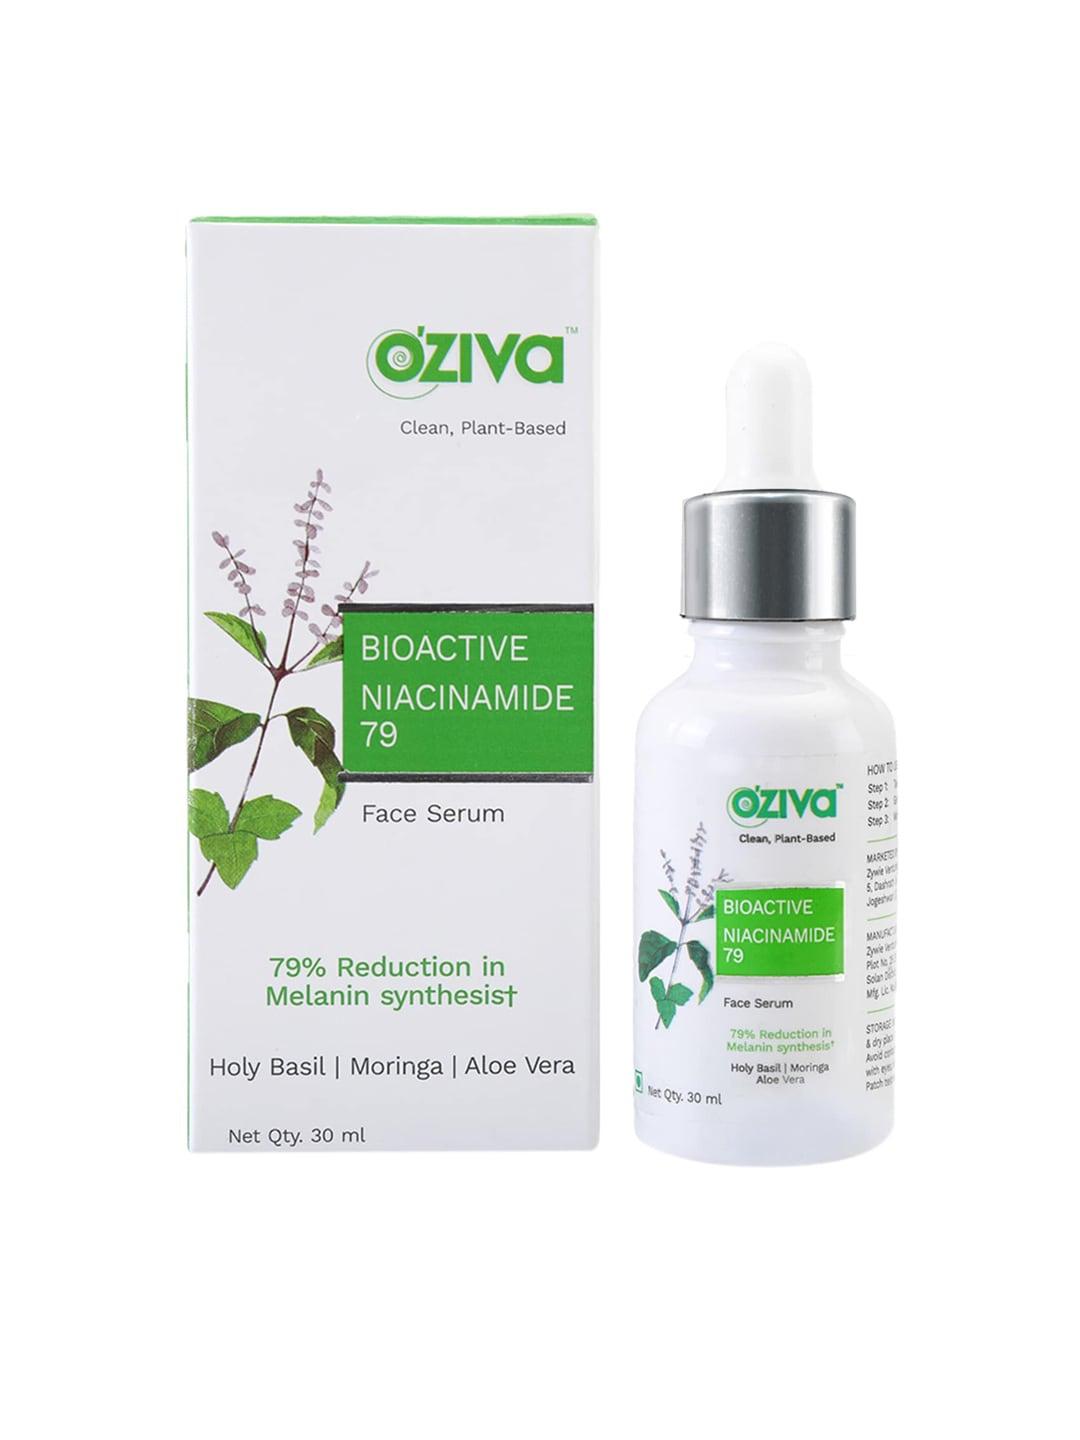 oziva bioactive niacinamide 79 face serum for acne & dark spots with aloe vera - 30 ml